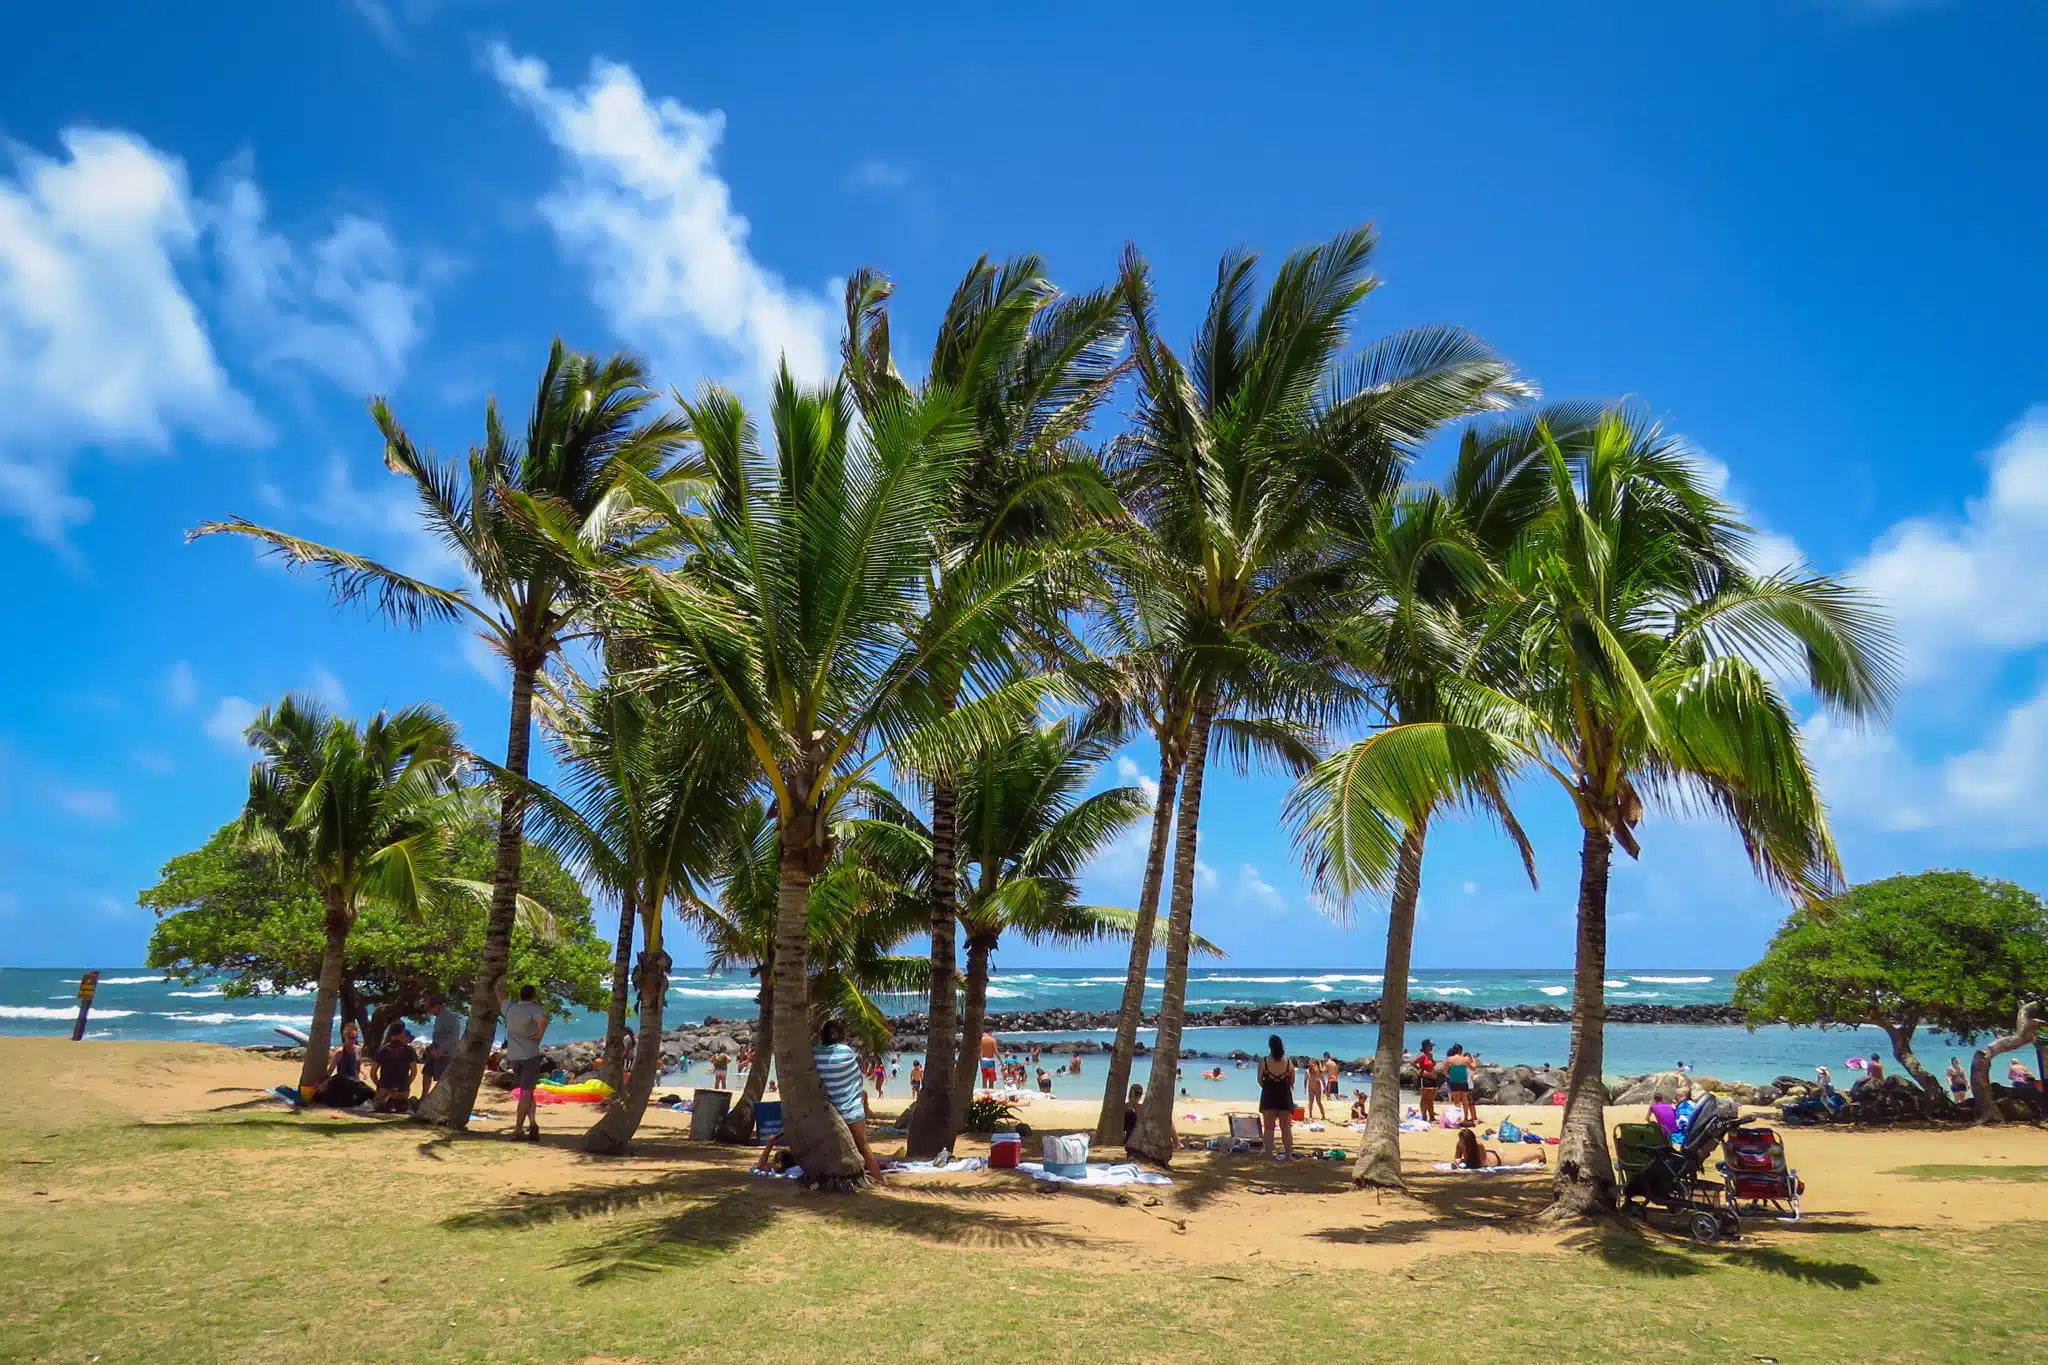 Lydgate Beach park is a Beach located in the city of Kapaa on Kauai, Hawaii